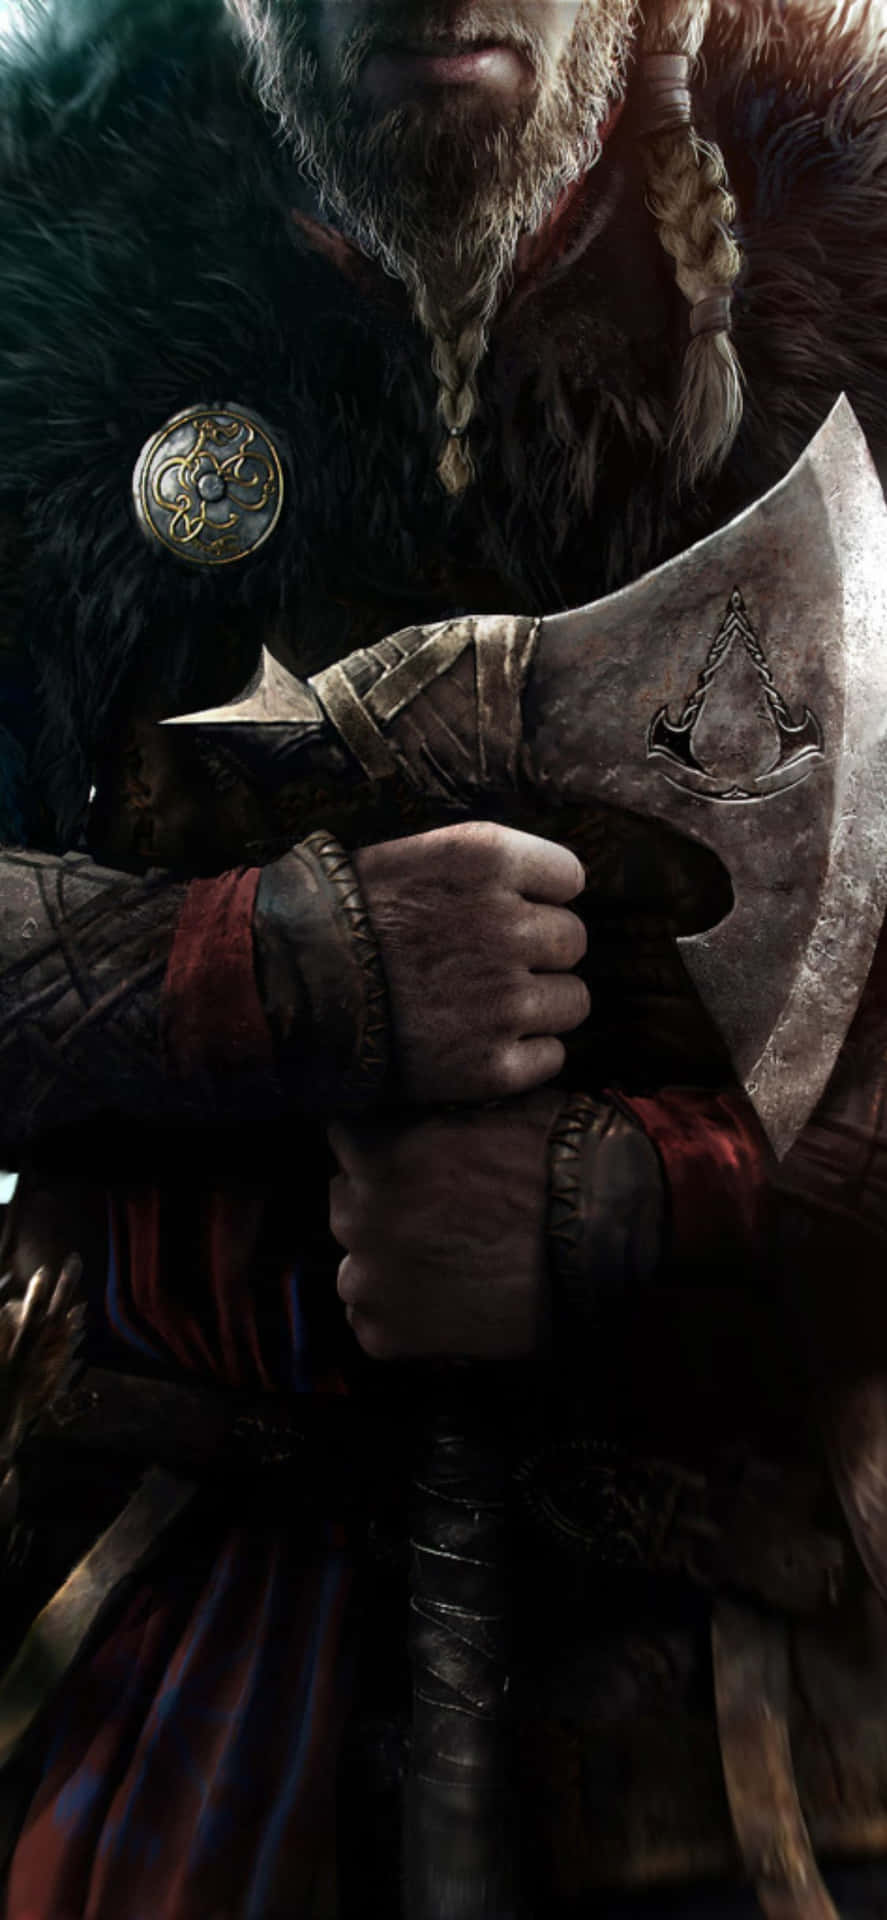 Fondode Pantalla De Assassin's Creed Valhalla Para Iphone Xs Mostrando A Un Guerrero Vikingo Sosteniendo Un Hacha.